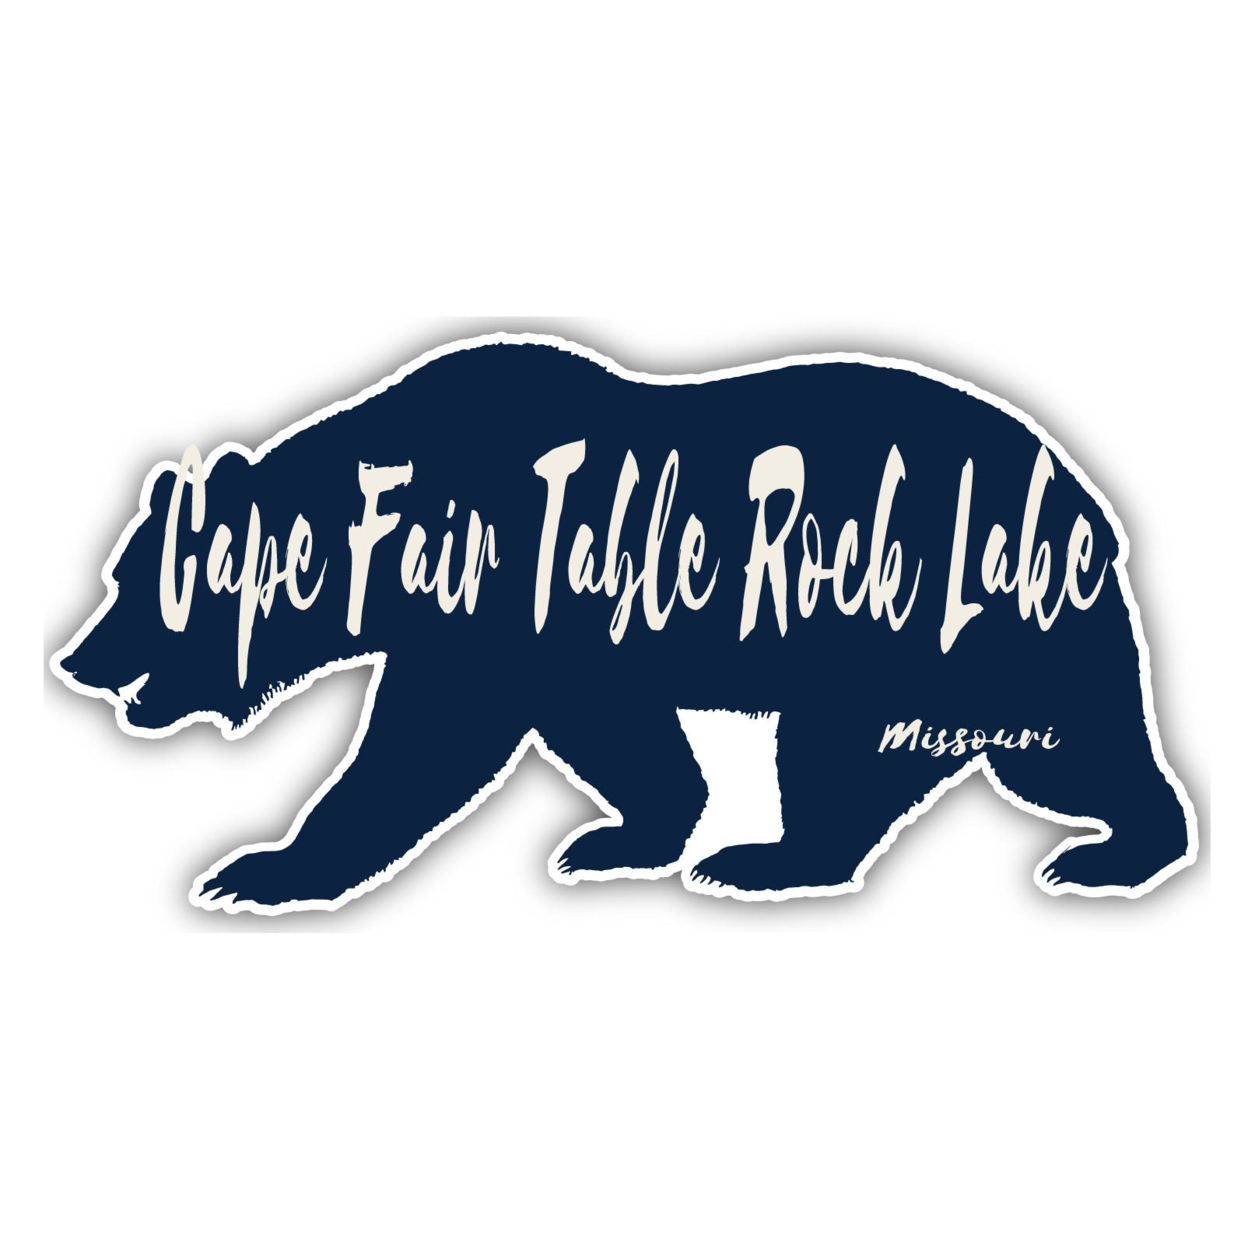 Cape Fair Table Rock Lake Missouri Souvenir Decorative Stickers (Choose Theme And Size) - Single Unit, 12-Inch, Bear